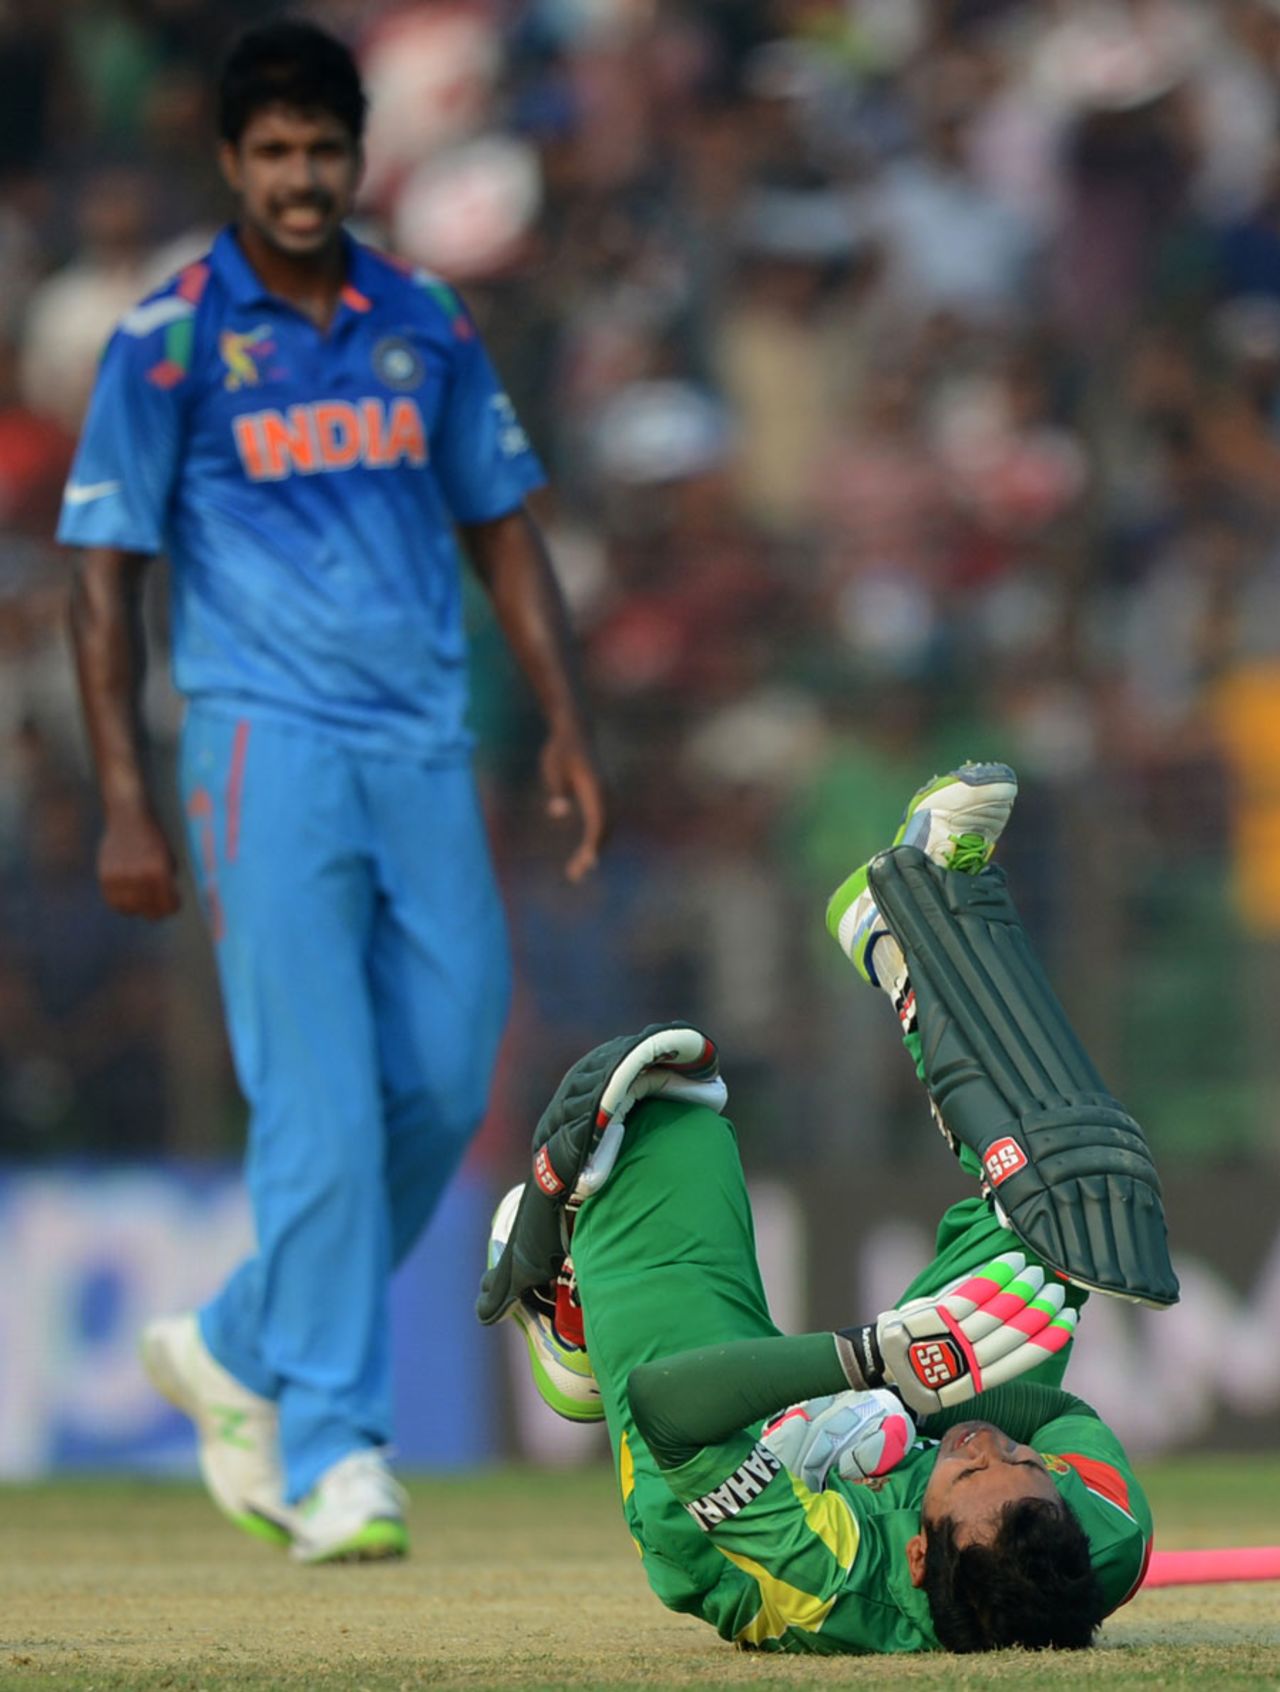 Mushfiqur Rahim lies in pain after being struck by a beamer, Bangladesh v India, Asia Cup 2014, Fatullah, February 26, 2014